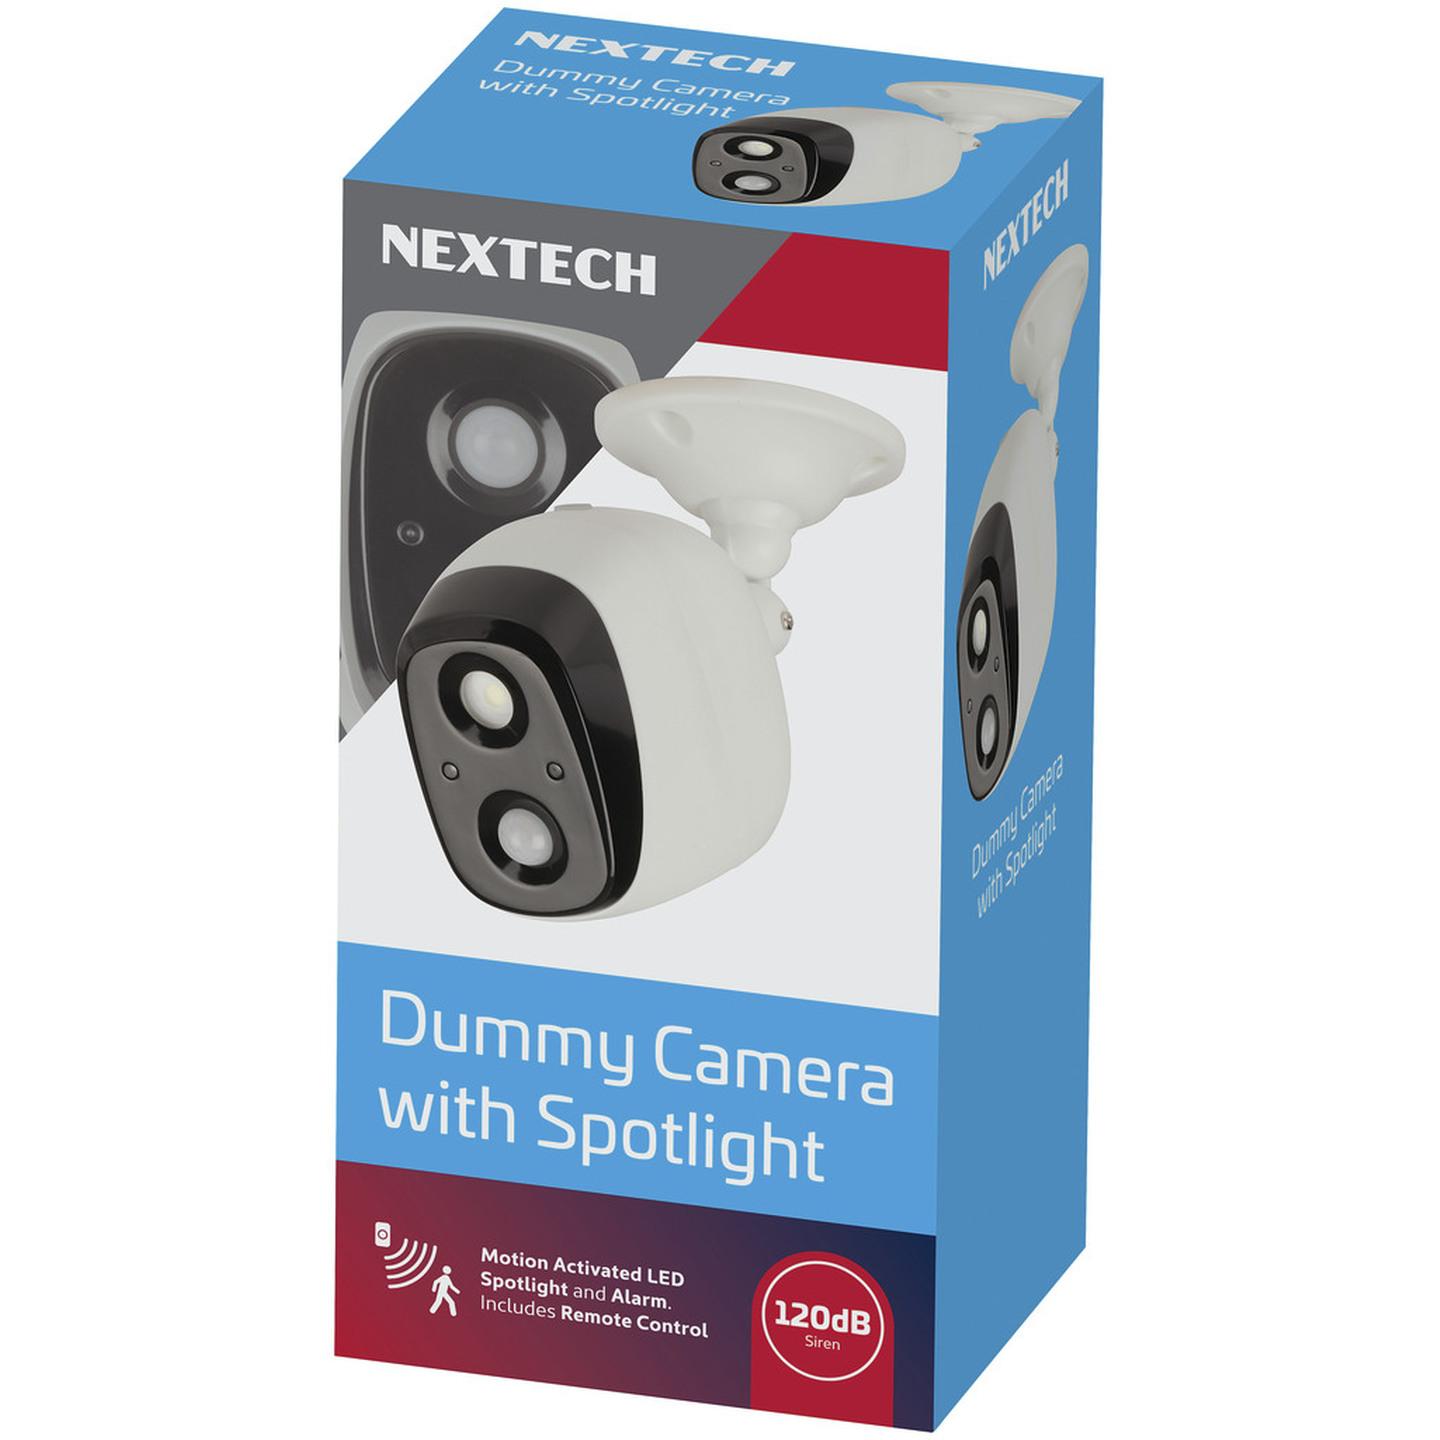 Dummy Camera with LED Spotlights